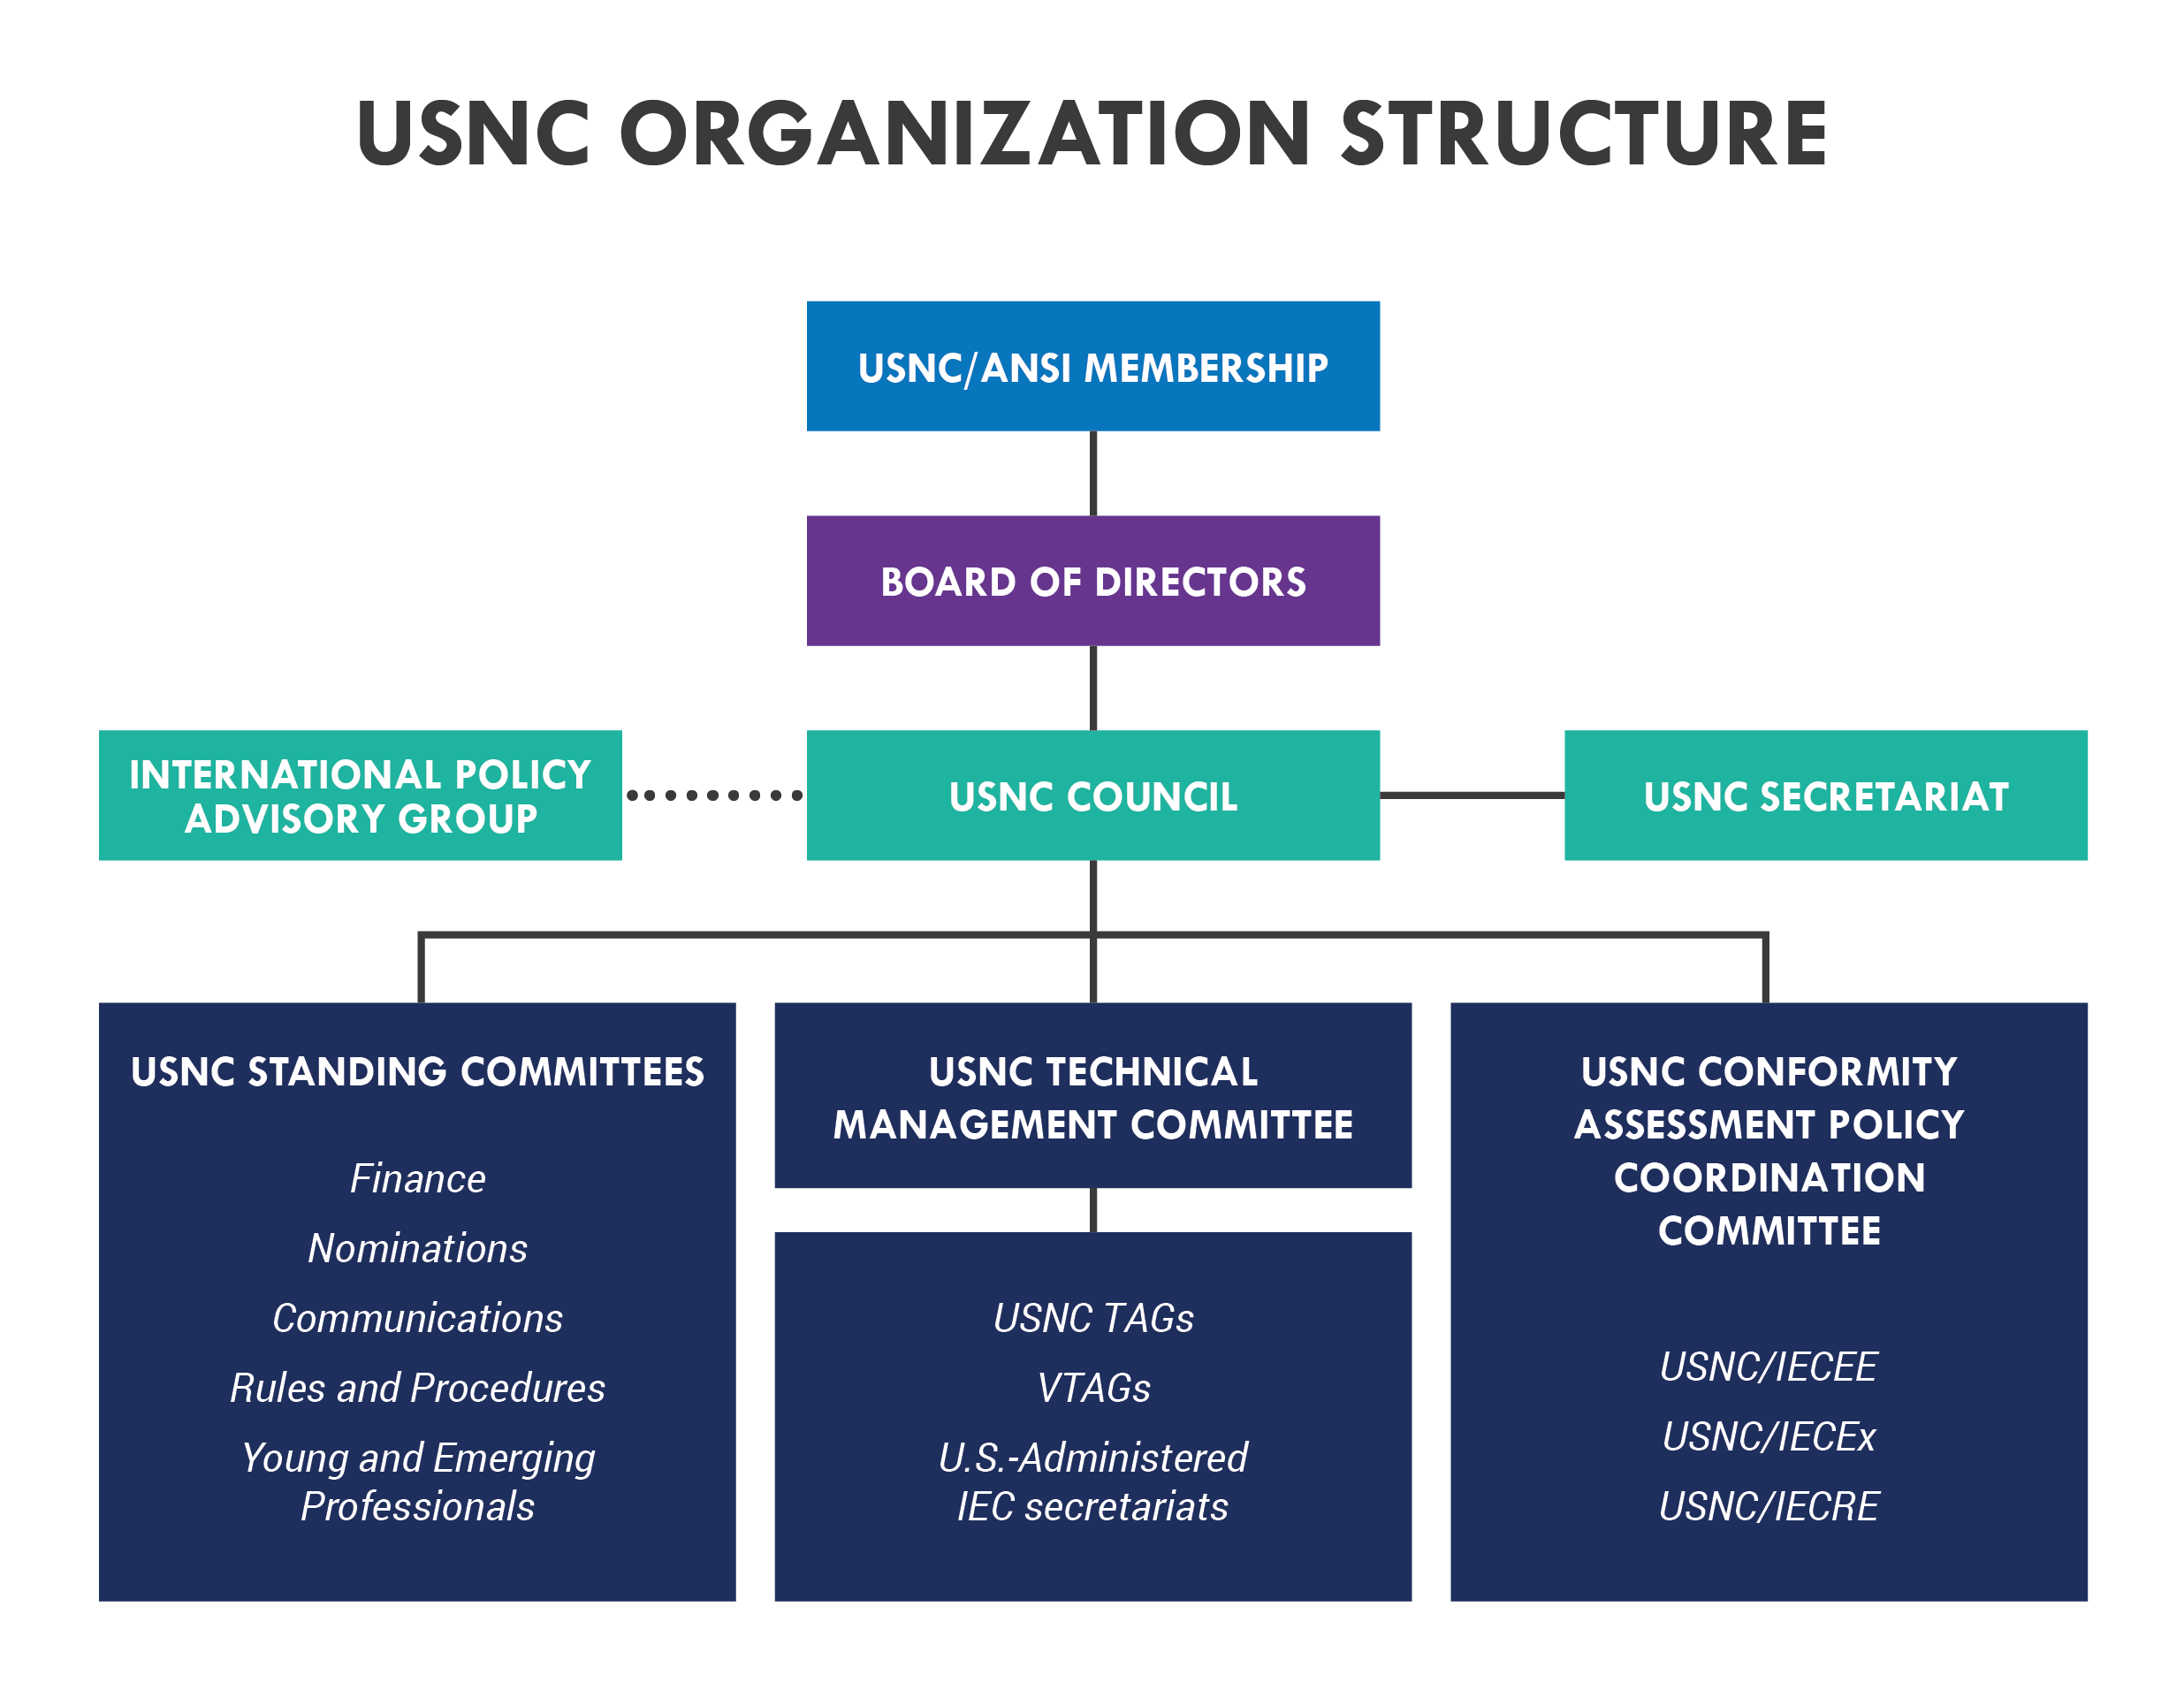 USNC of the IEC organizational chart